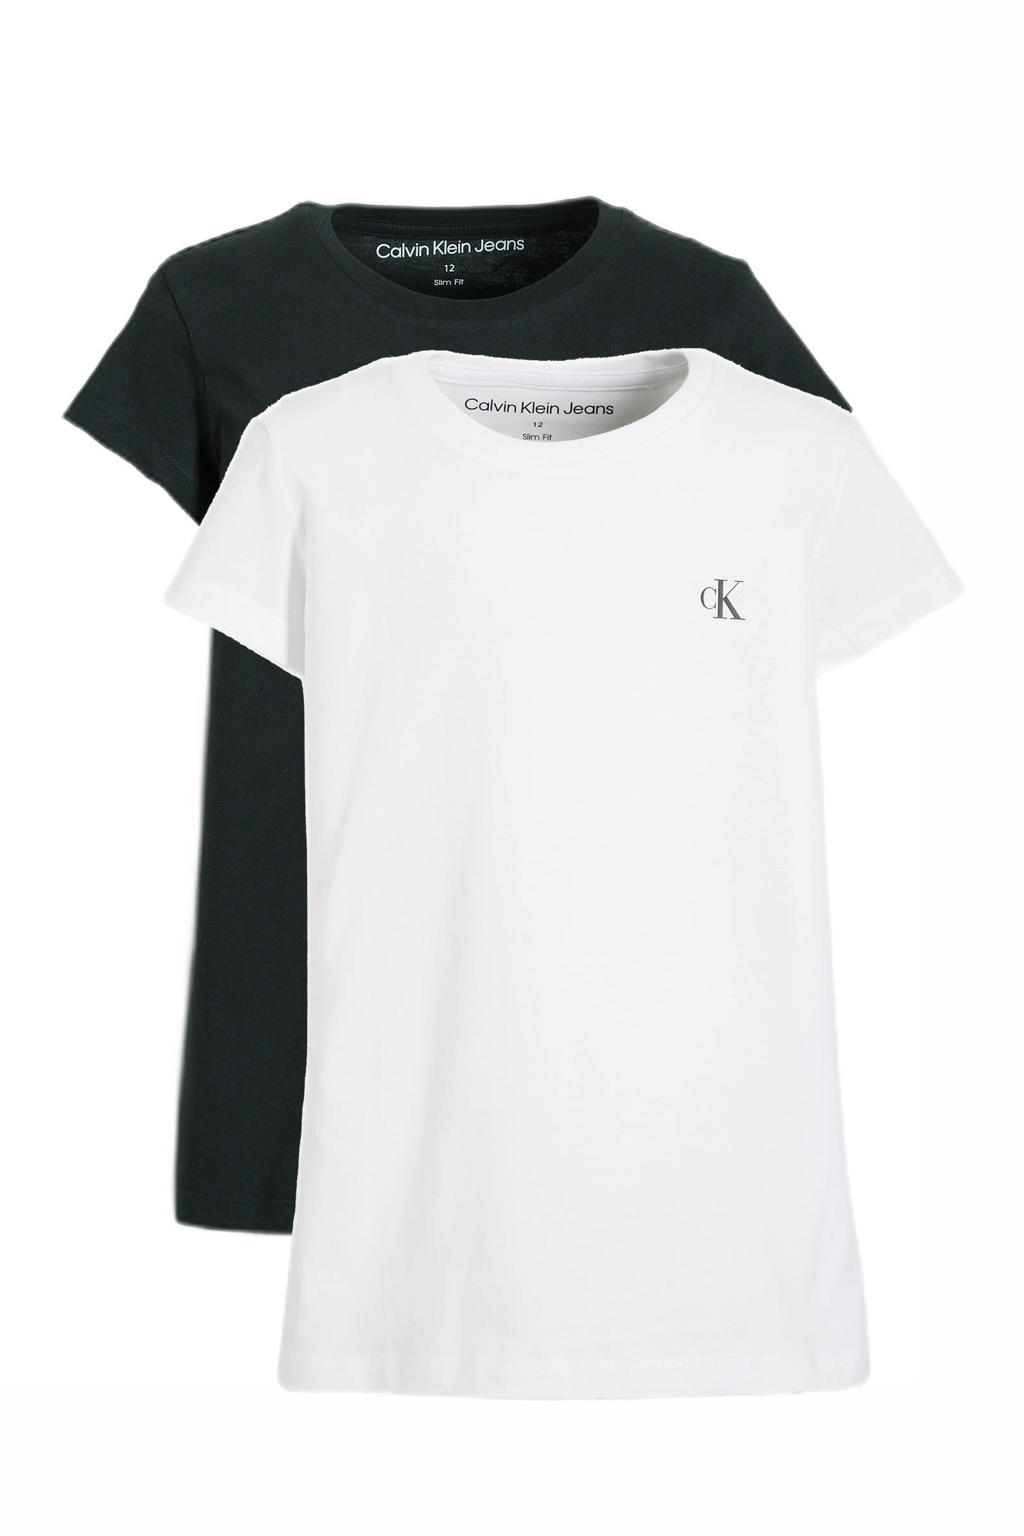 CALVIN KLEIN JEANS T-shirt - set van 2 zwart/wit